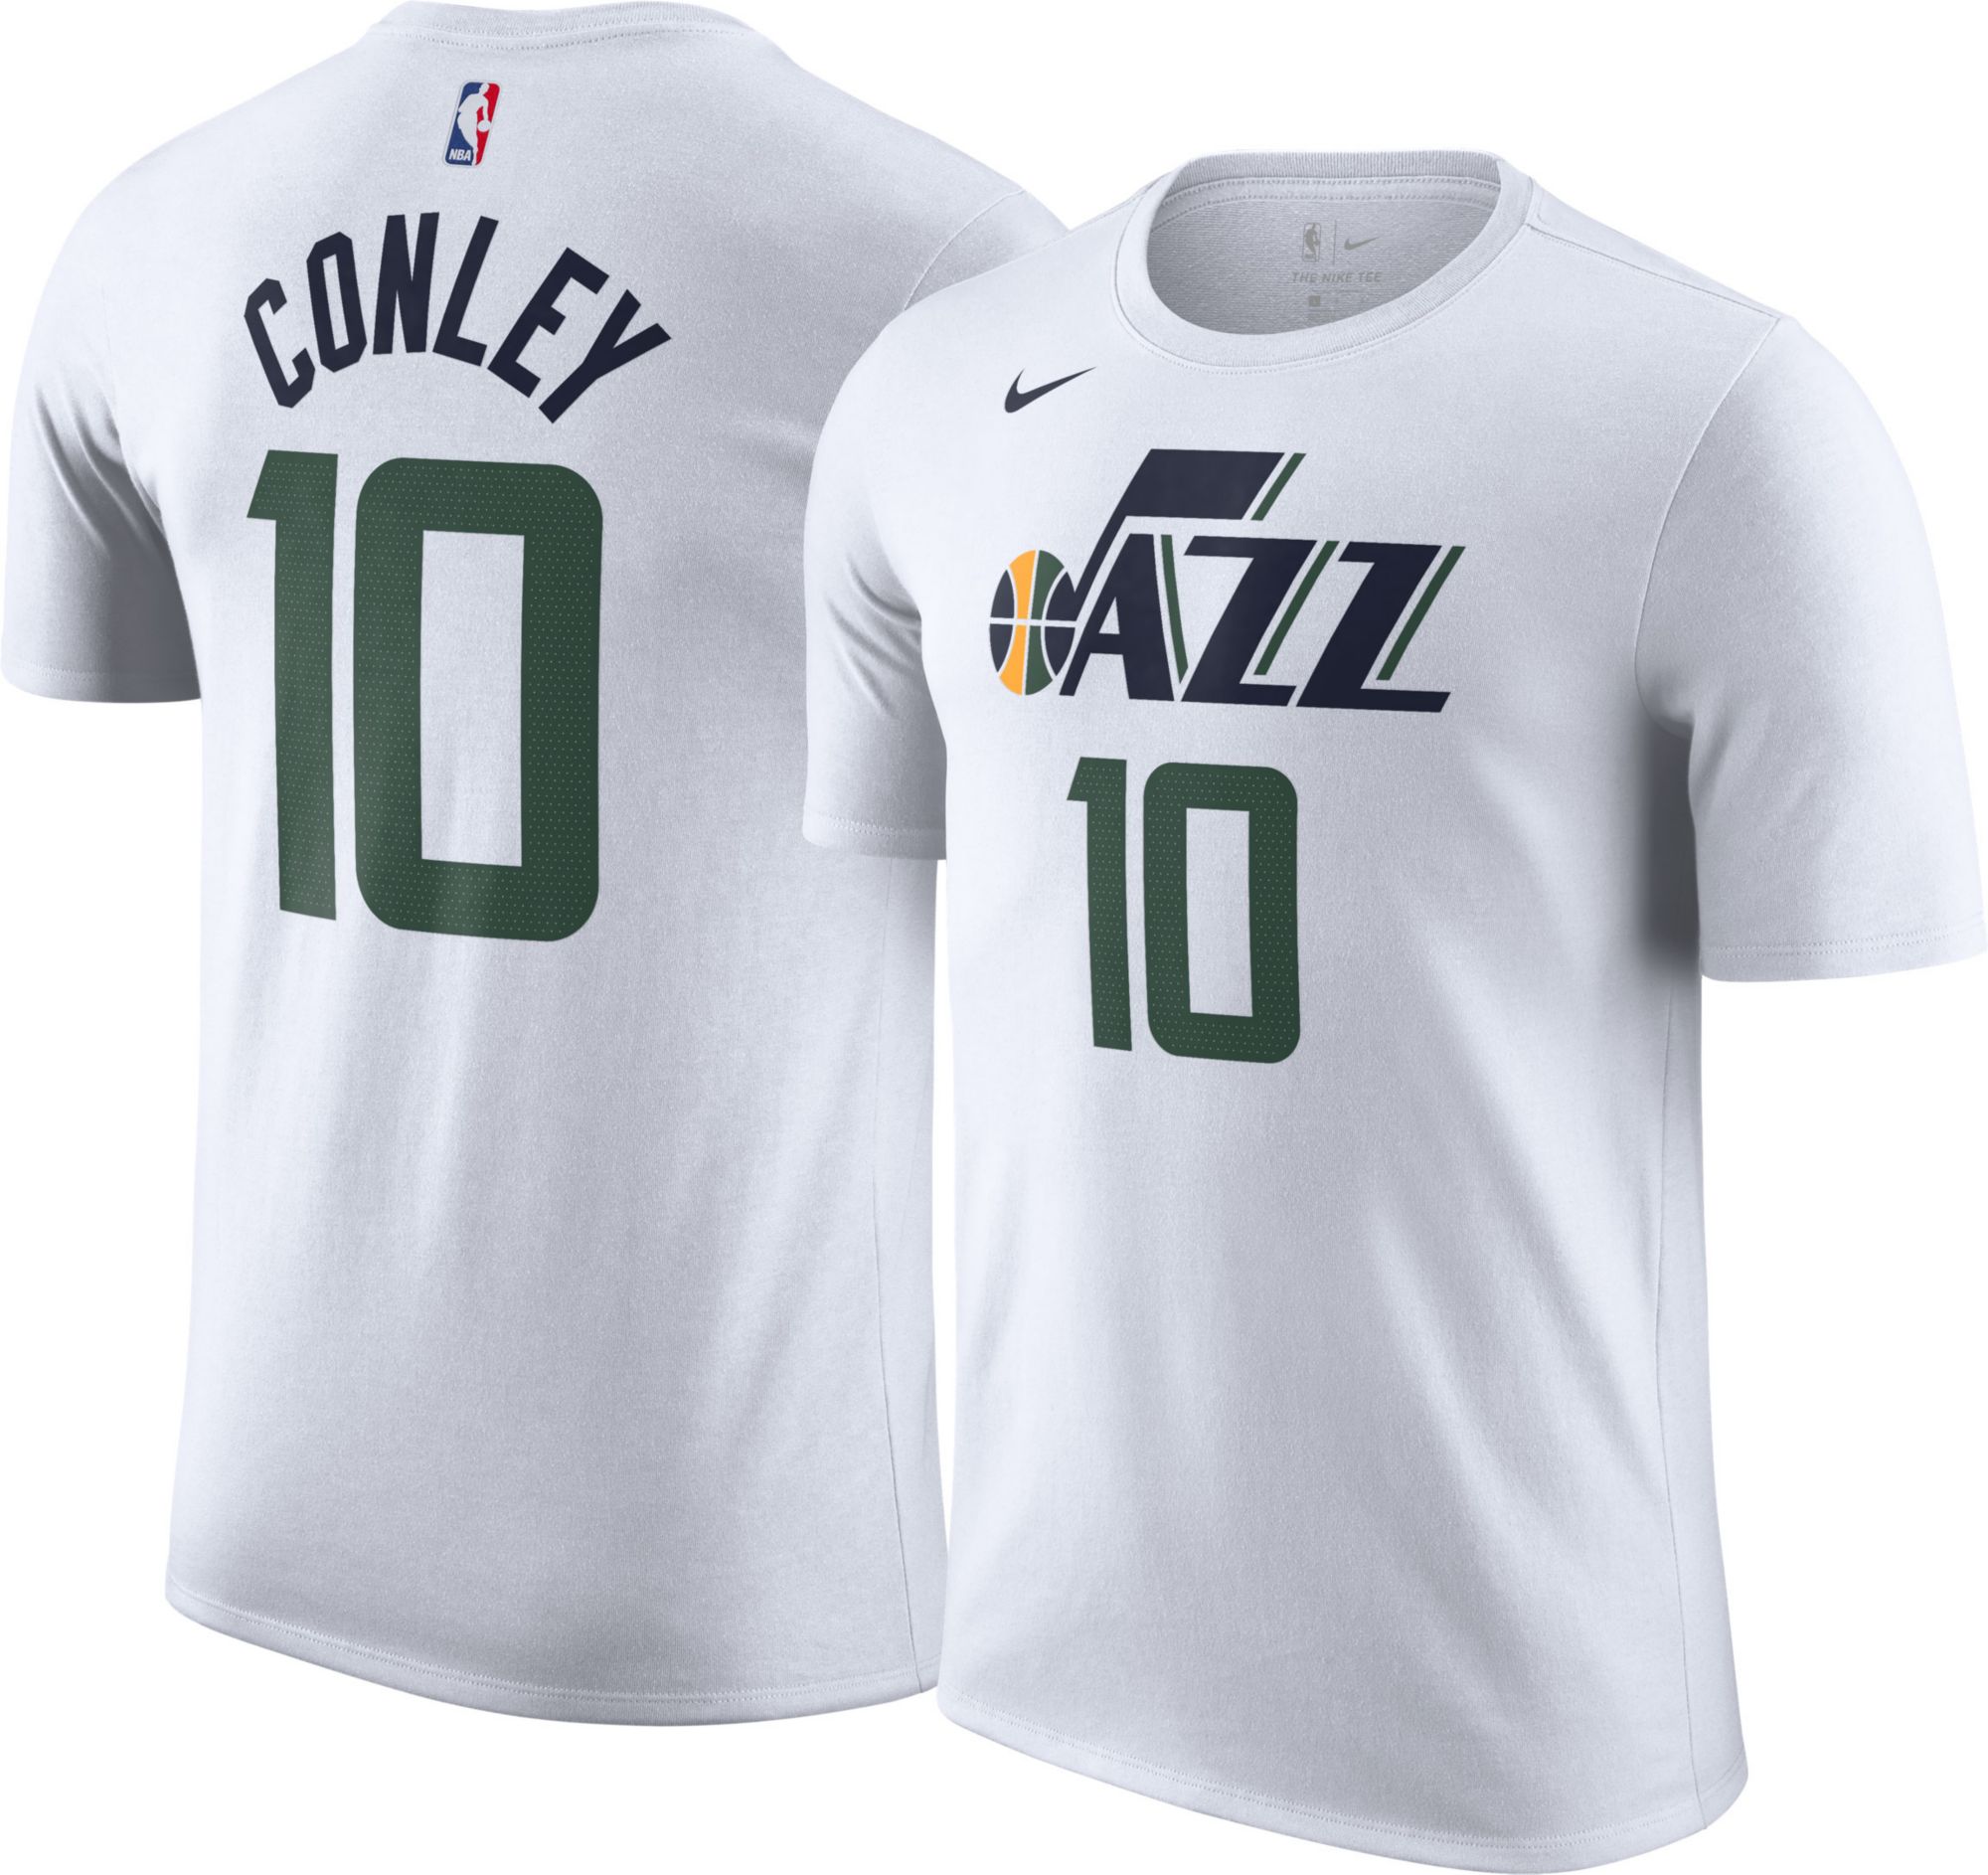 Men's Utah Jazz Nike Navy Legend Practice Performance T-Shirt